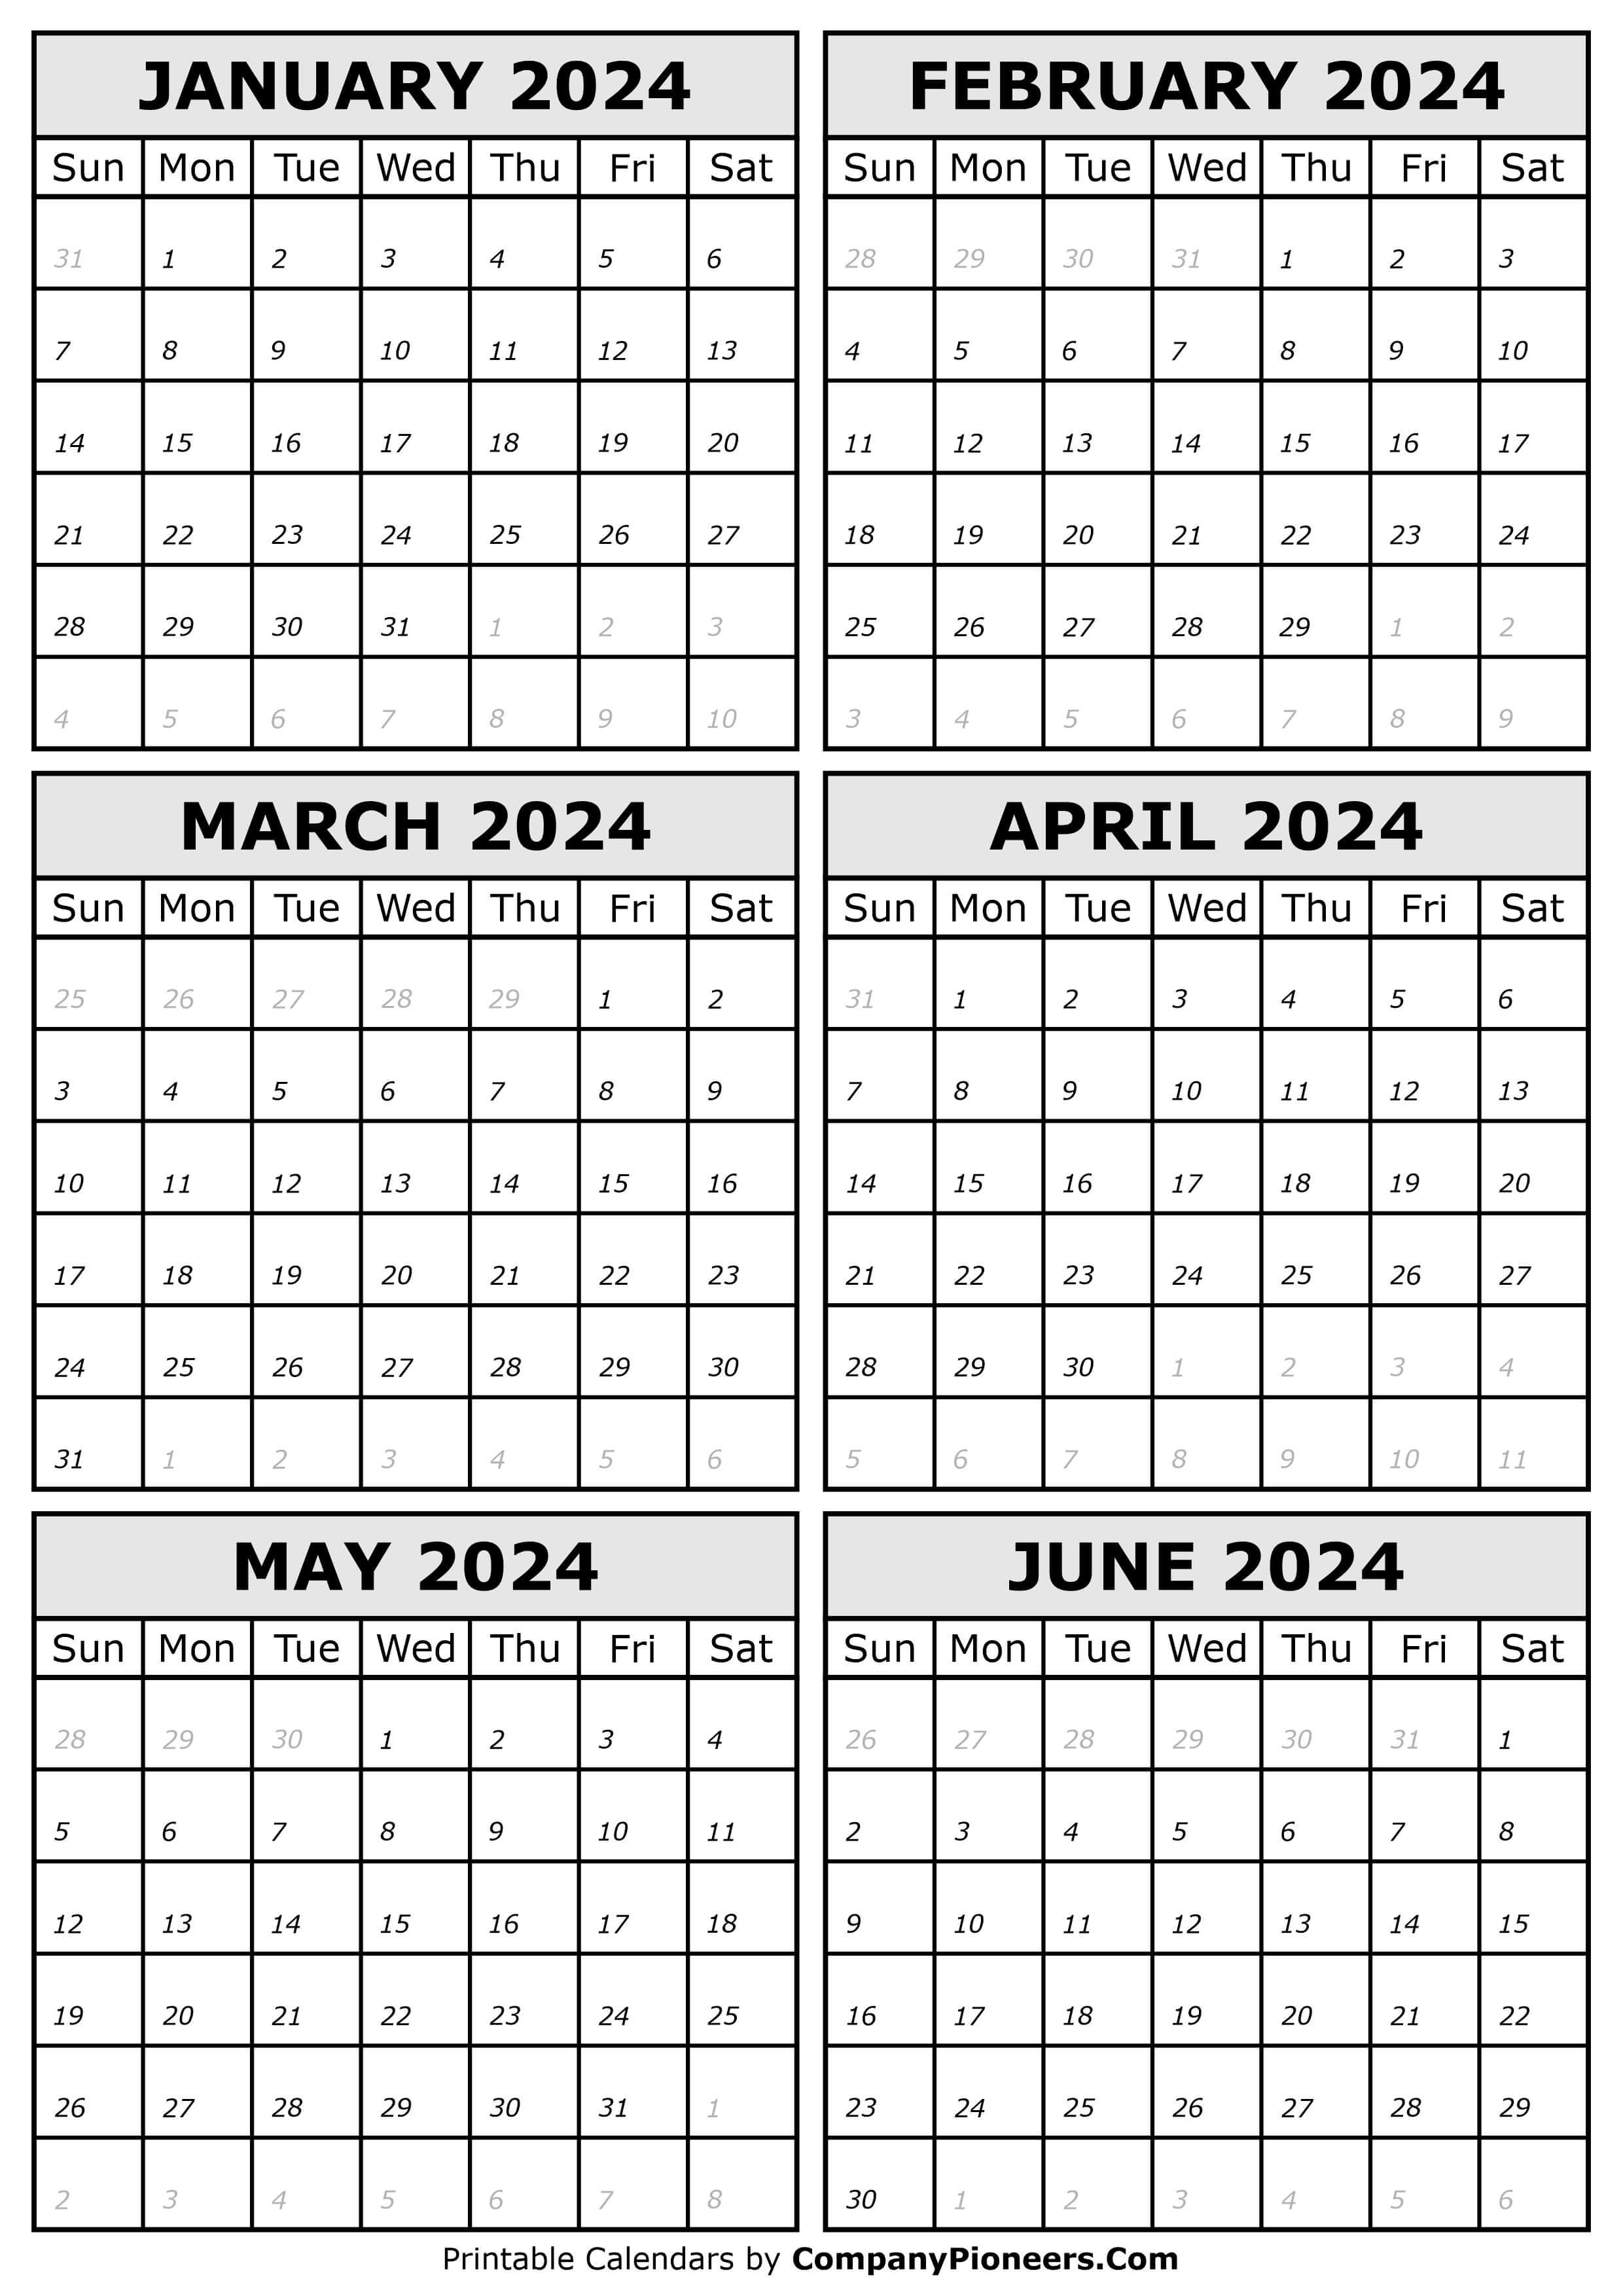 january-to-june-2023-calendar-1st-half-yearly-calendarkart-printable-vrogue